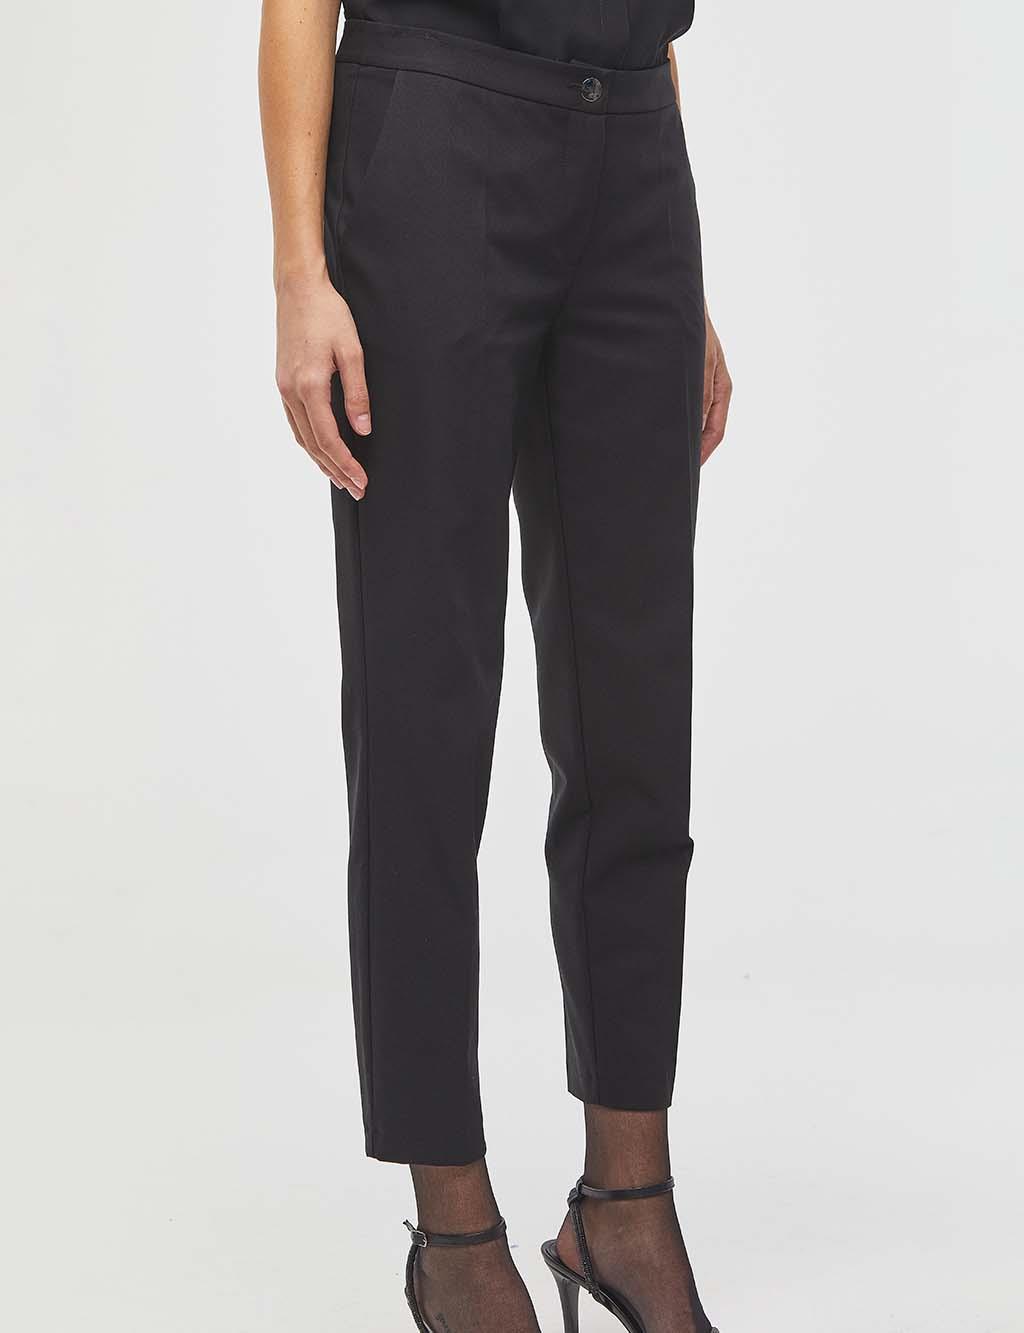 Basic Tight Pants SZ-19501 Black